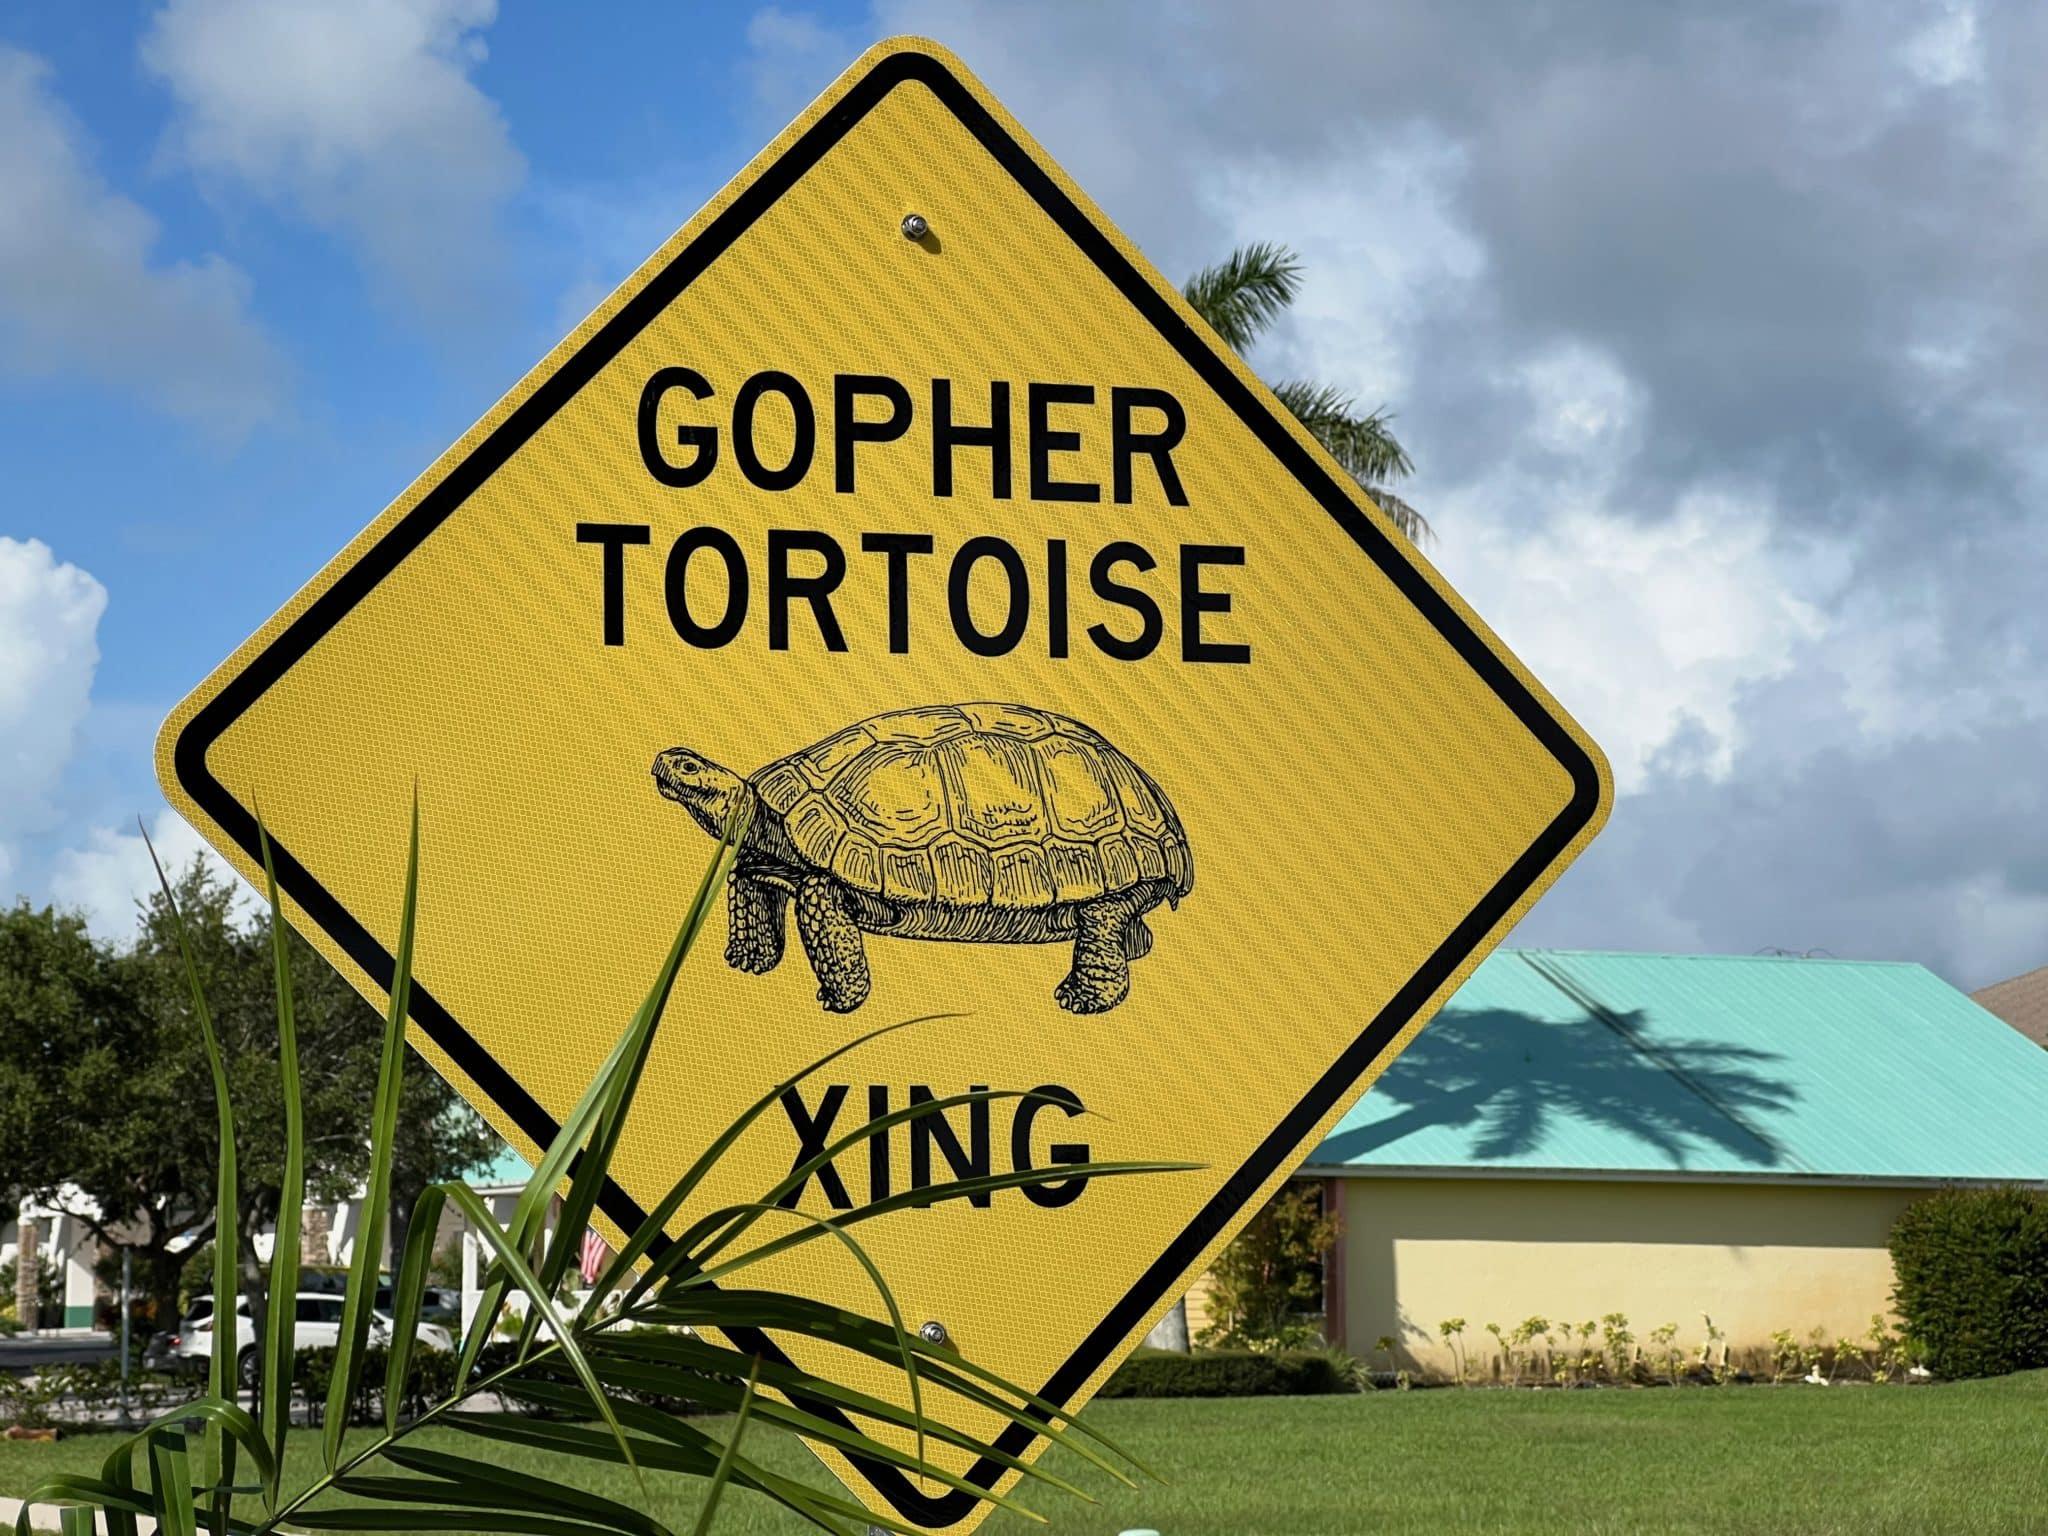 Gopher tortoise crossing sign